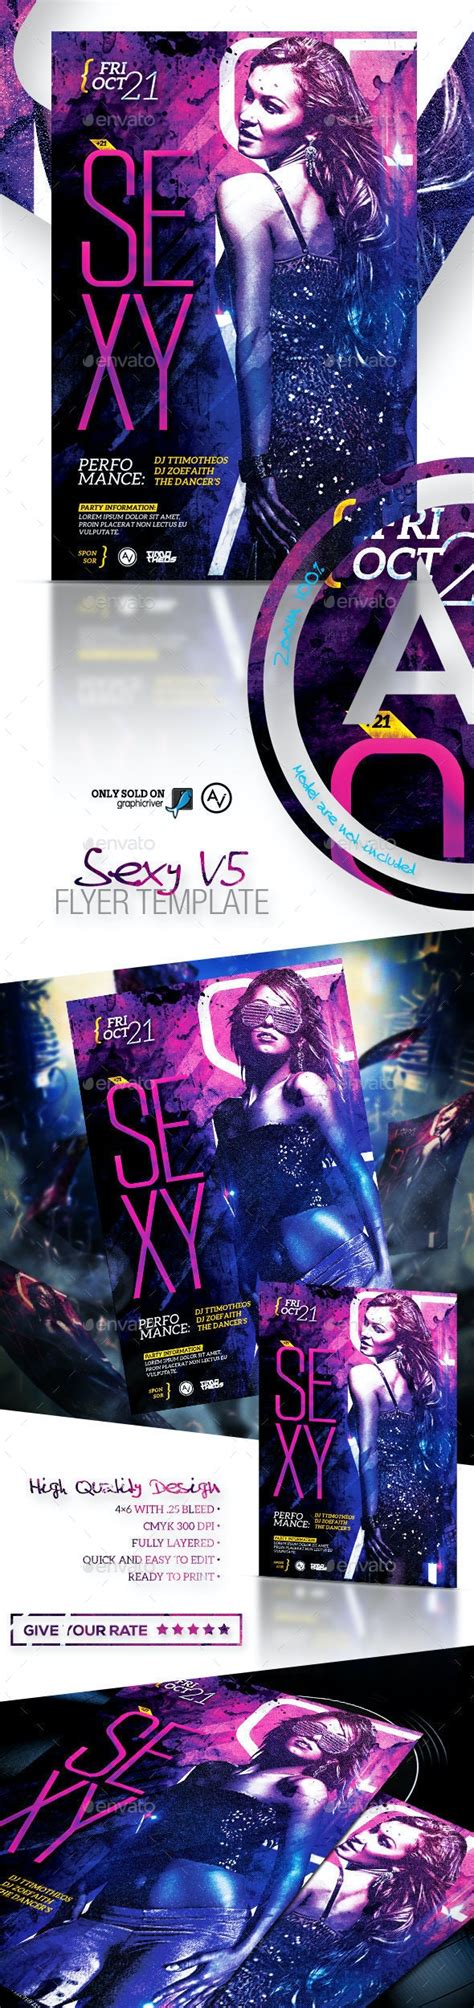 sexy flyer template v5 by amorjesu graphicriver